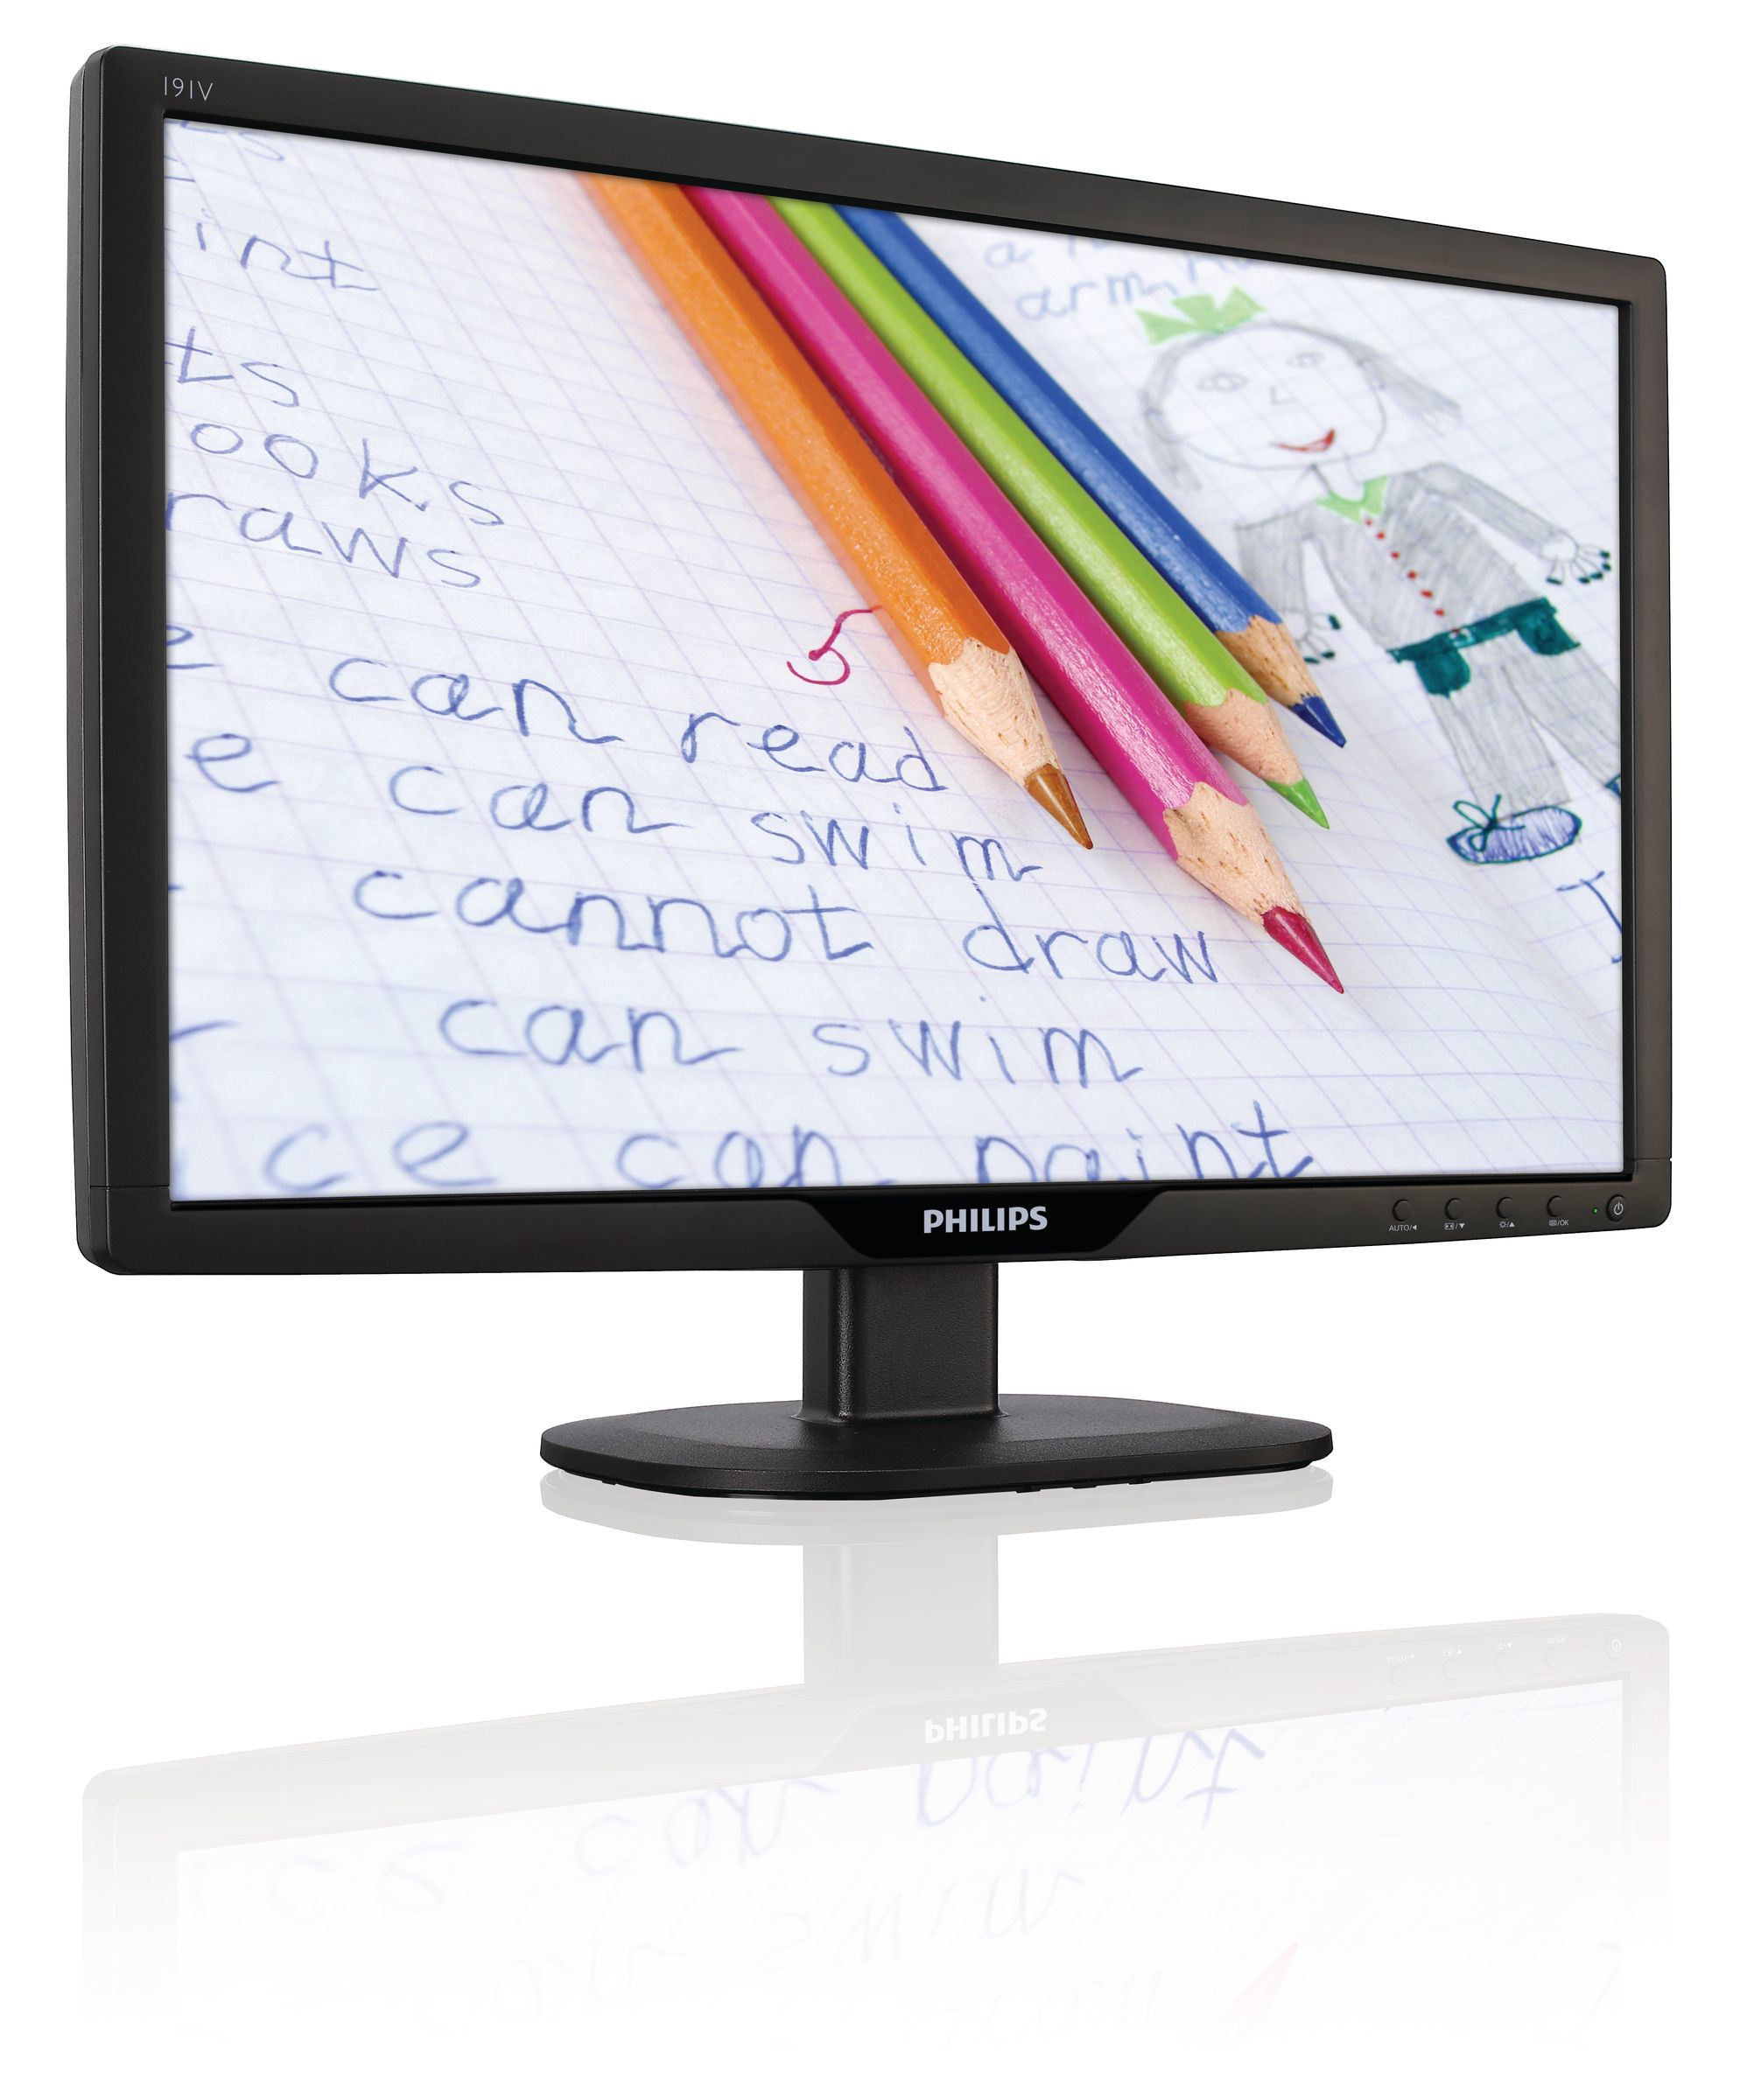 Kiwi folder Canada Specs Philips LCD monitor with SmartControl Lite, Audio 191V2AB/00 Computer  Monitors (191V2AB/00)